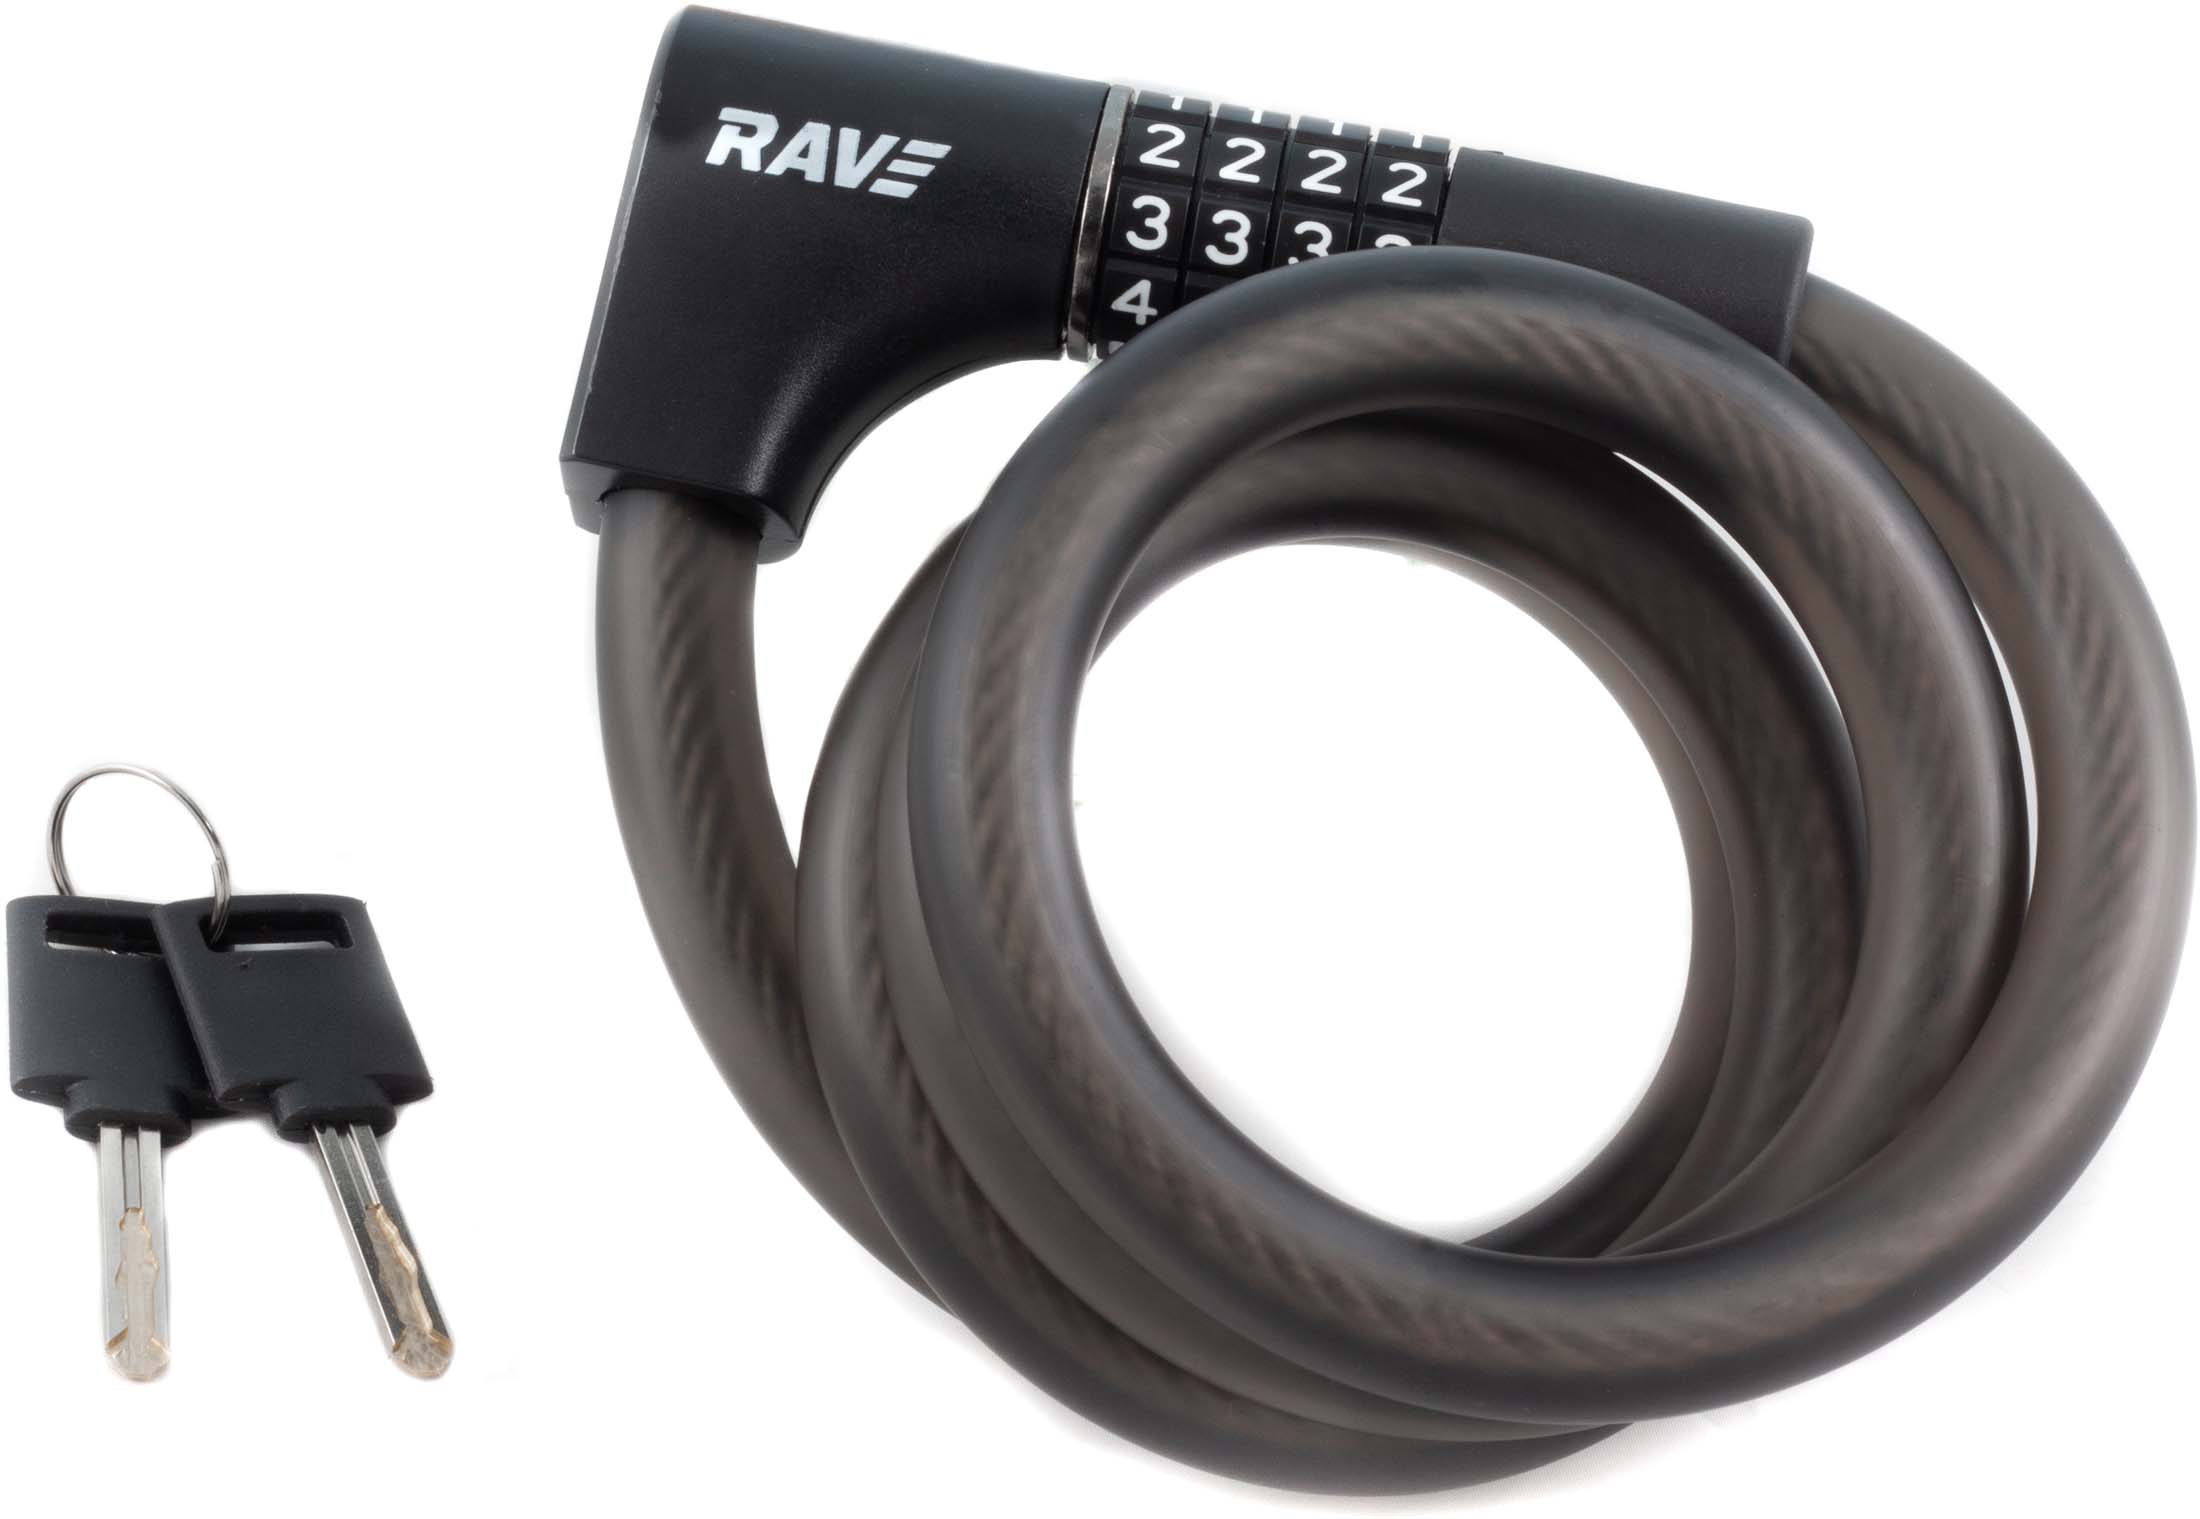 rave spiral lock 2 in 1 pro 5 - combination lock incl. 2 keys - 120 cm / 15 mm